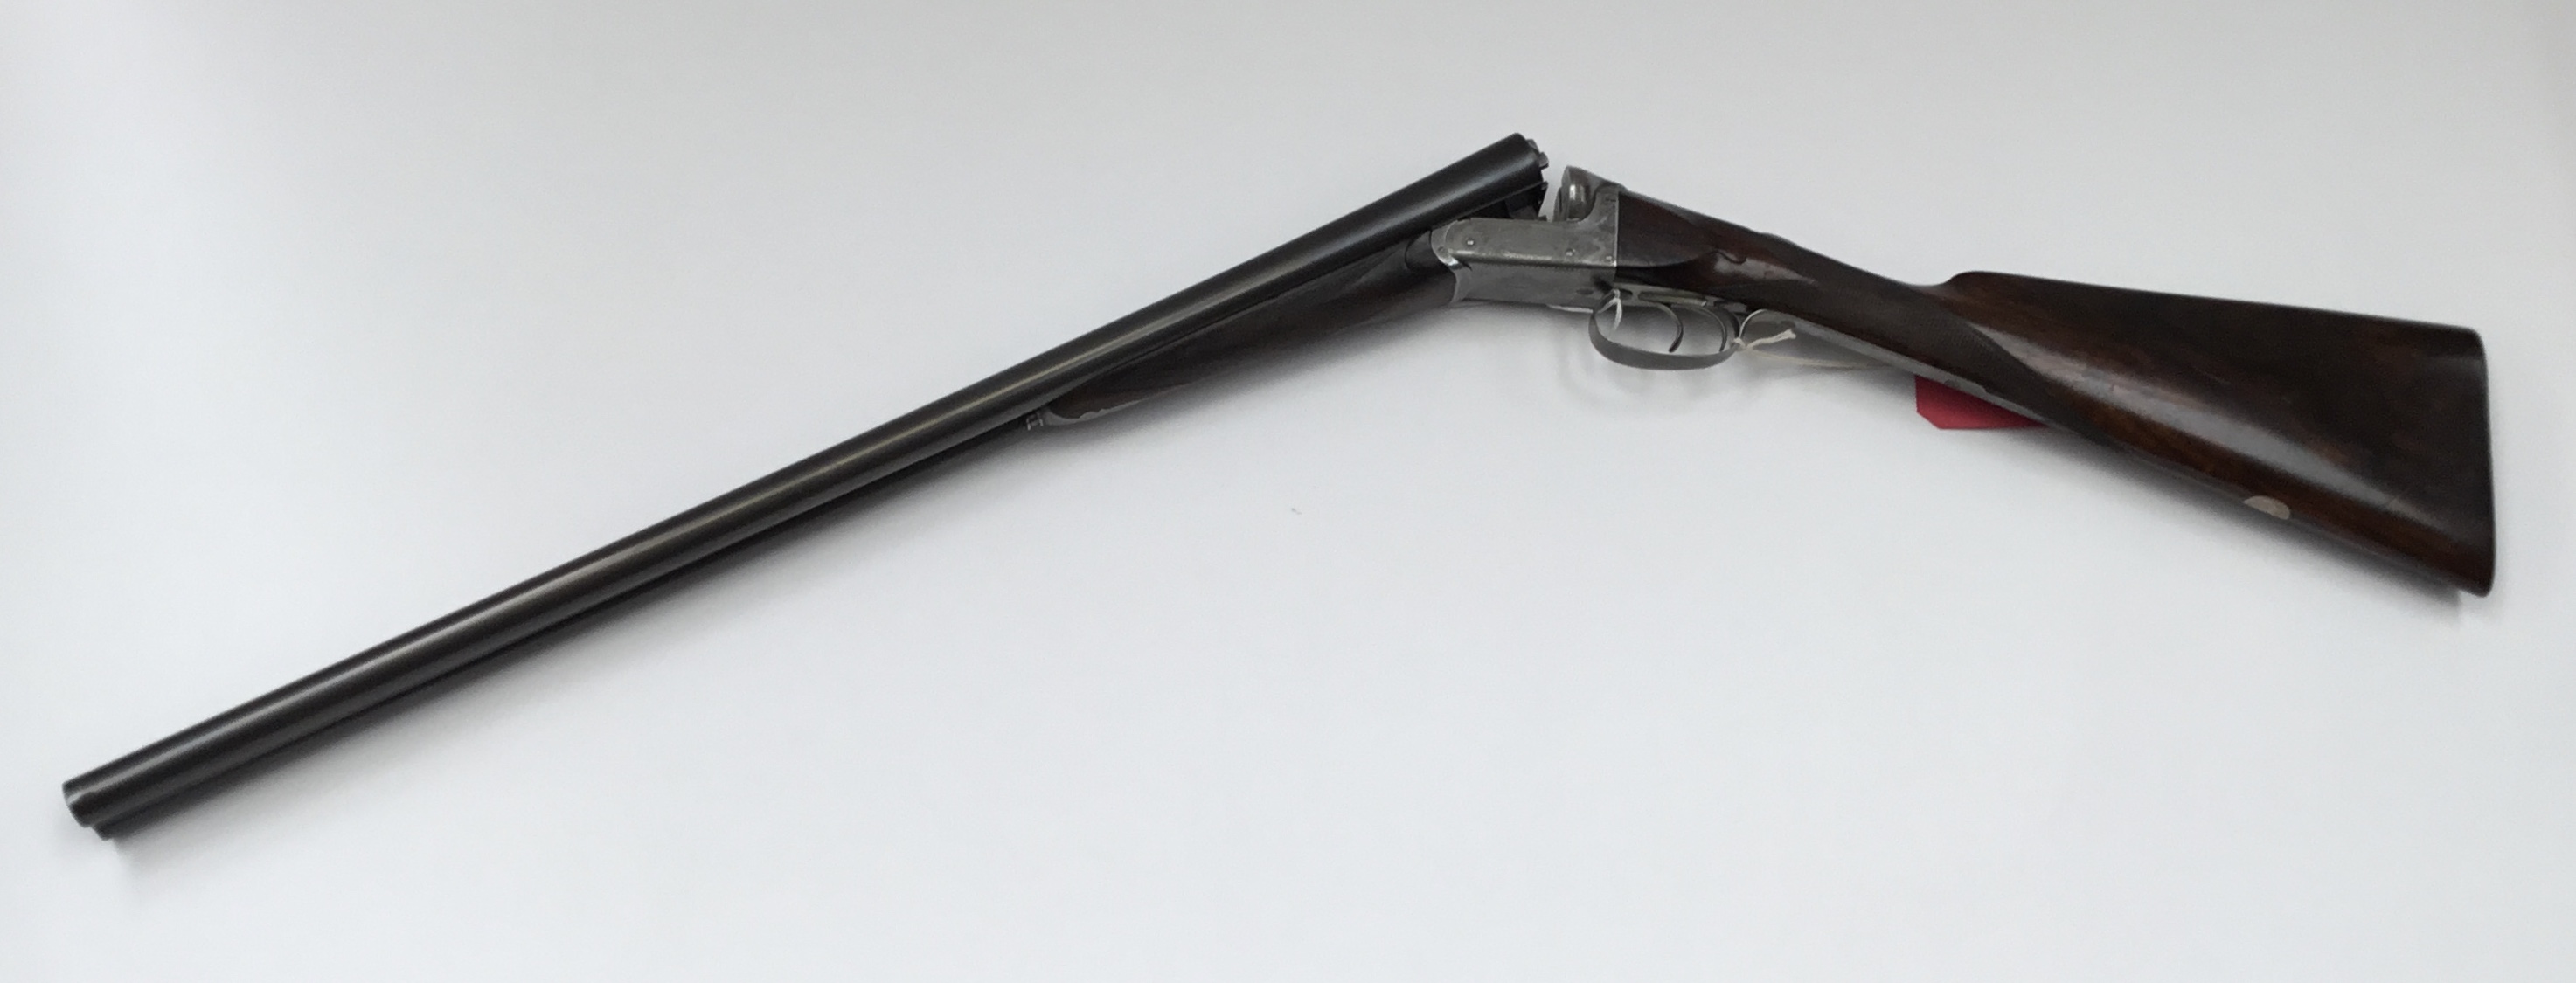 12 bore sbs hammerless ejector shotgun by William Evans, London No. 3608.  Sleeved 26" barrels